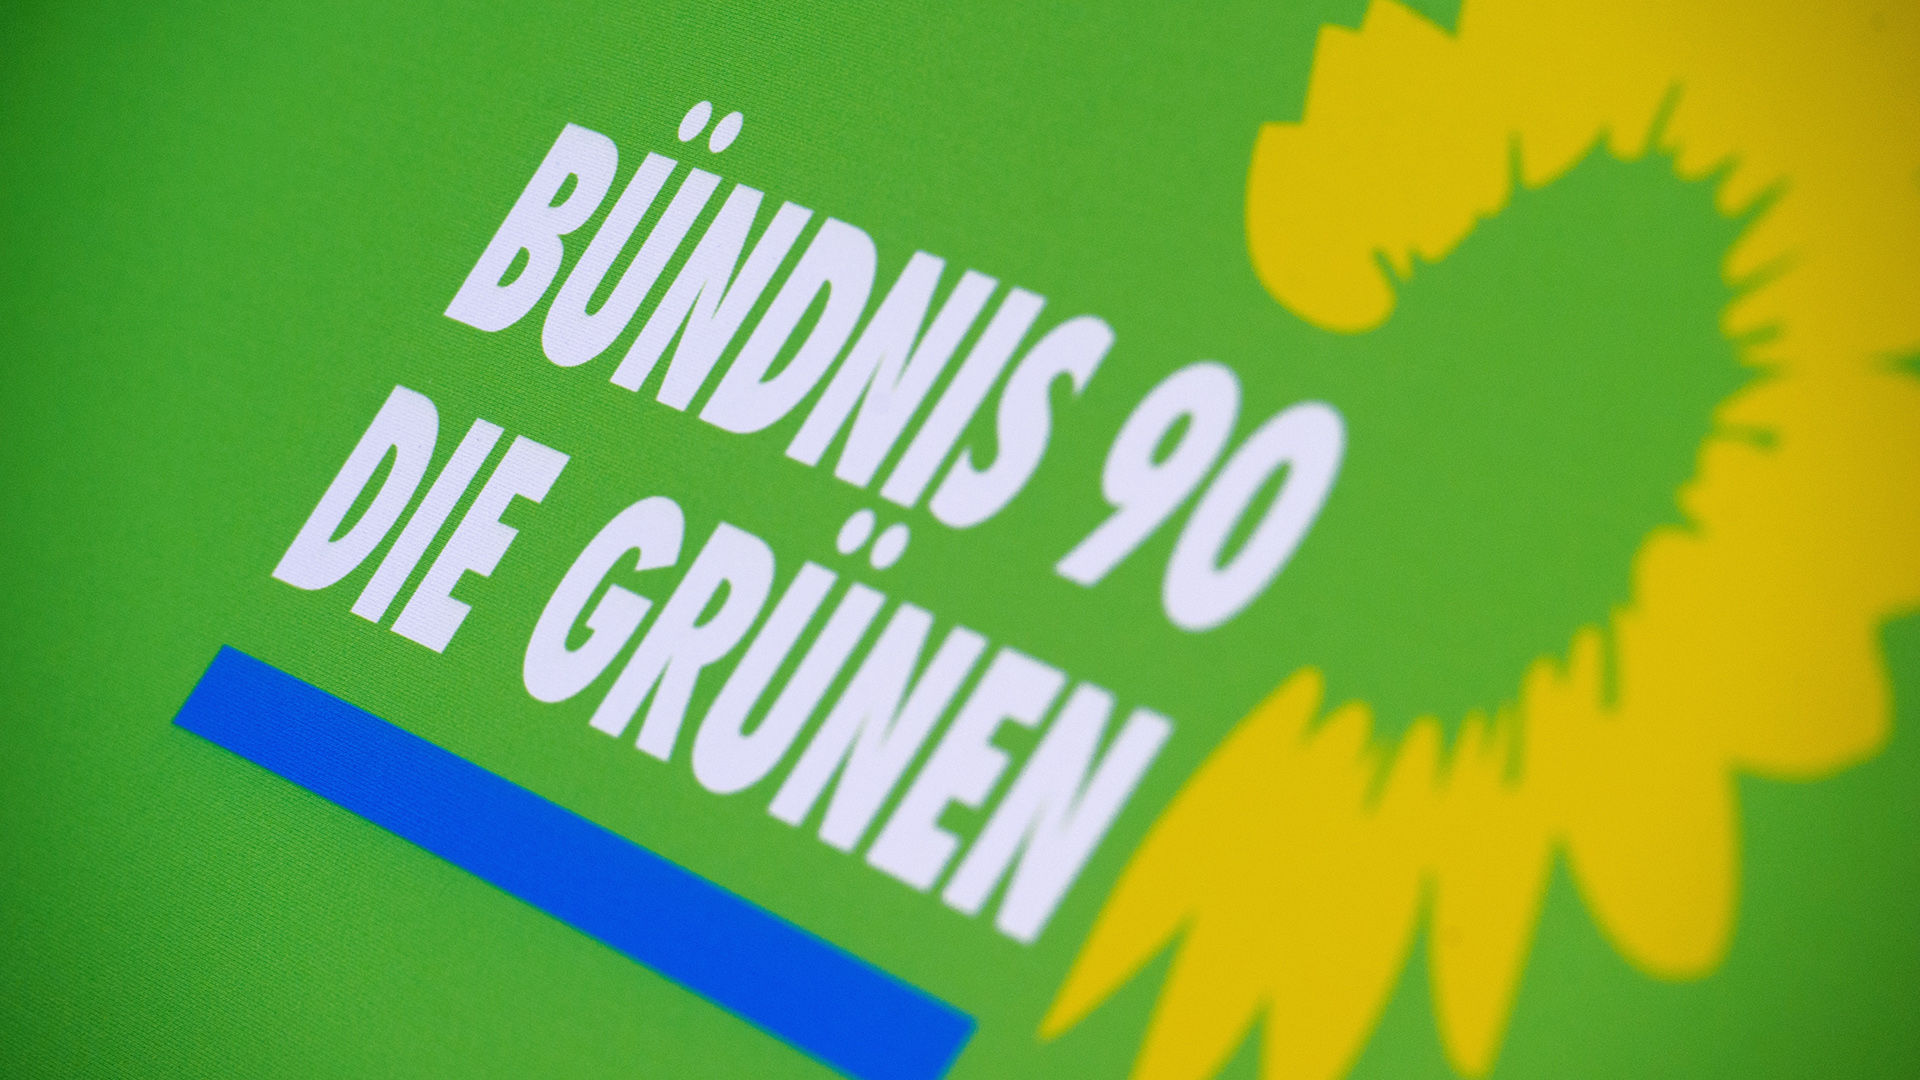 Logo Bündnis 90/ Die Grünen